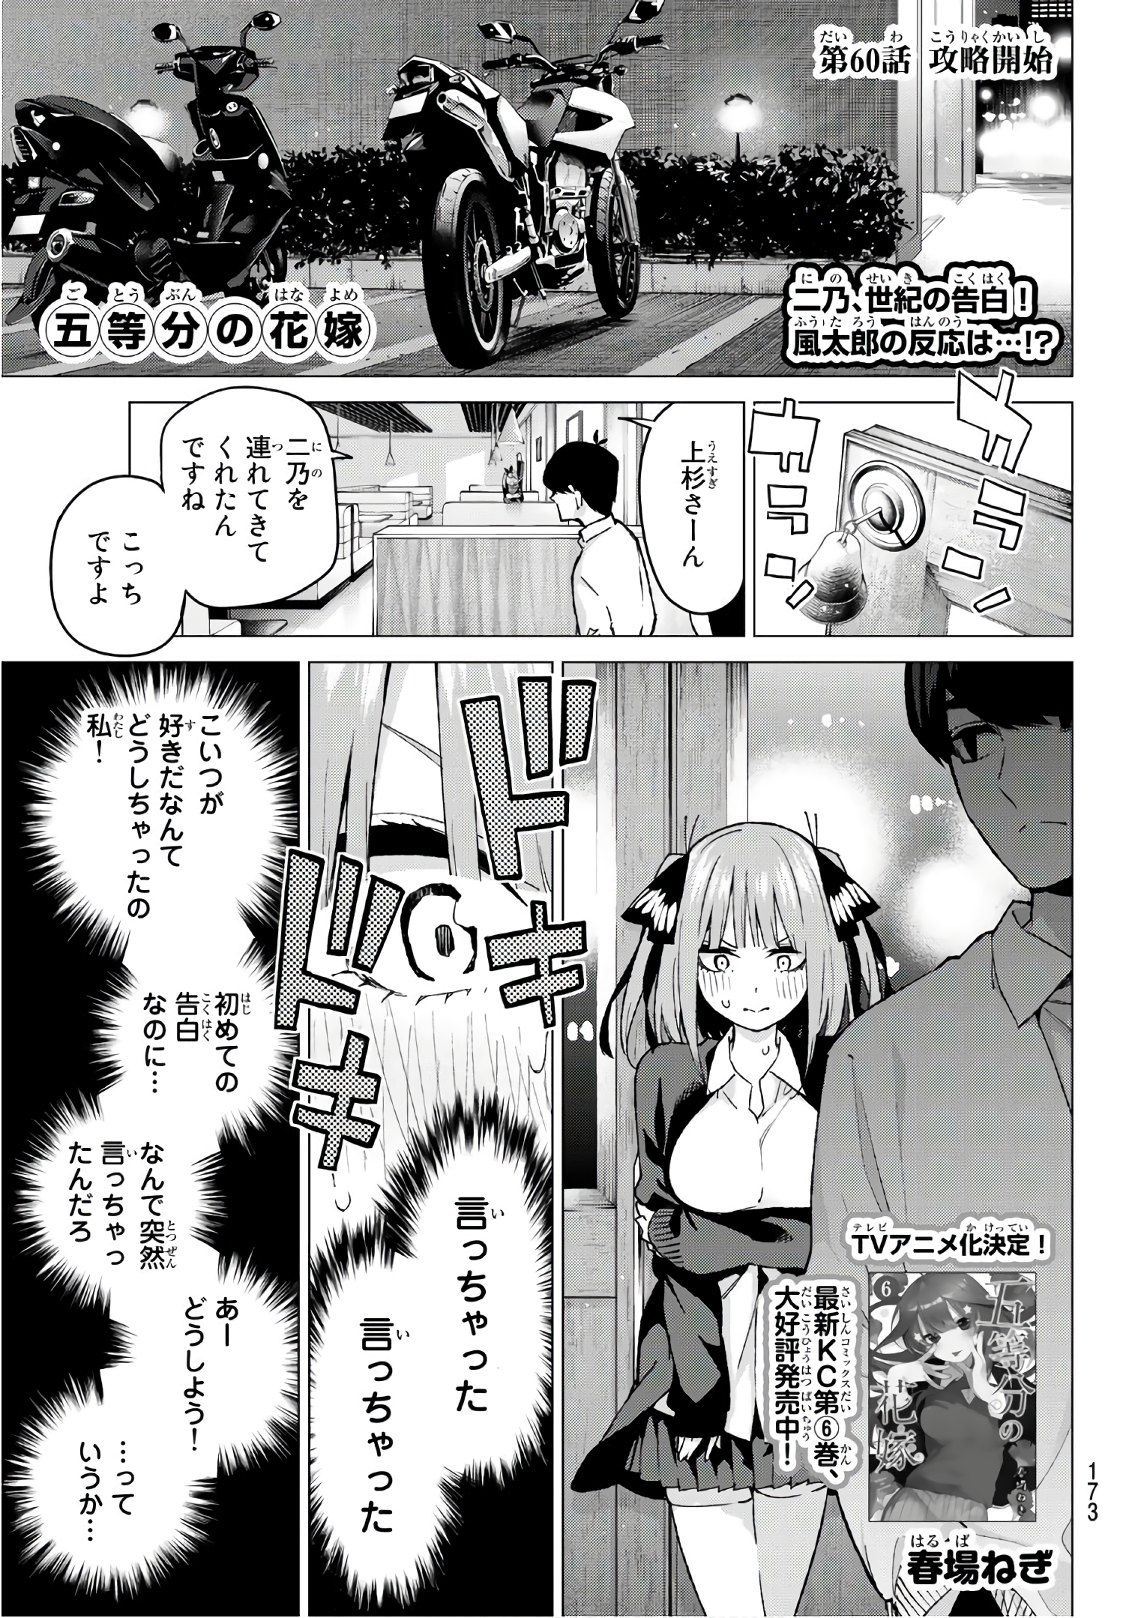 5Toubun no Hanayome - I woke up and the quintuplets were acting strange  (Doujinshi) manga - MangaHasu